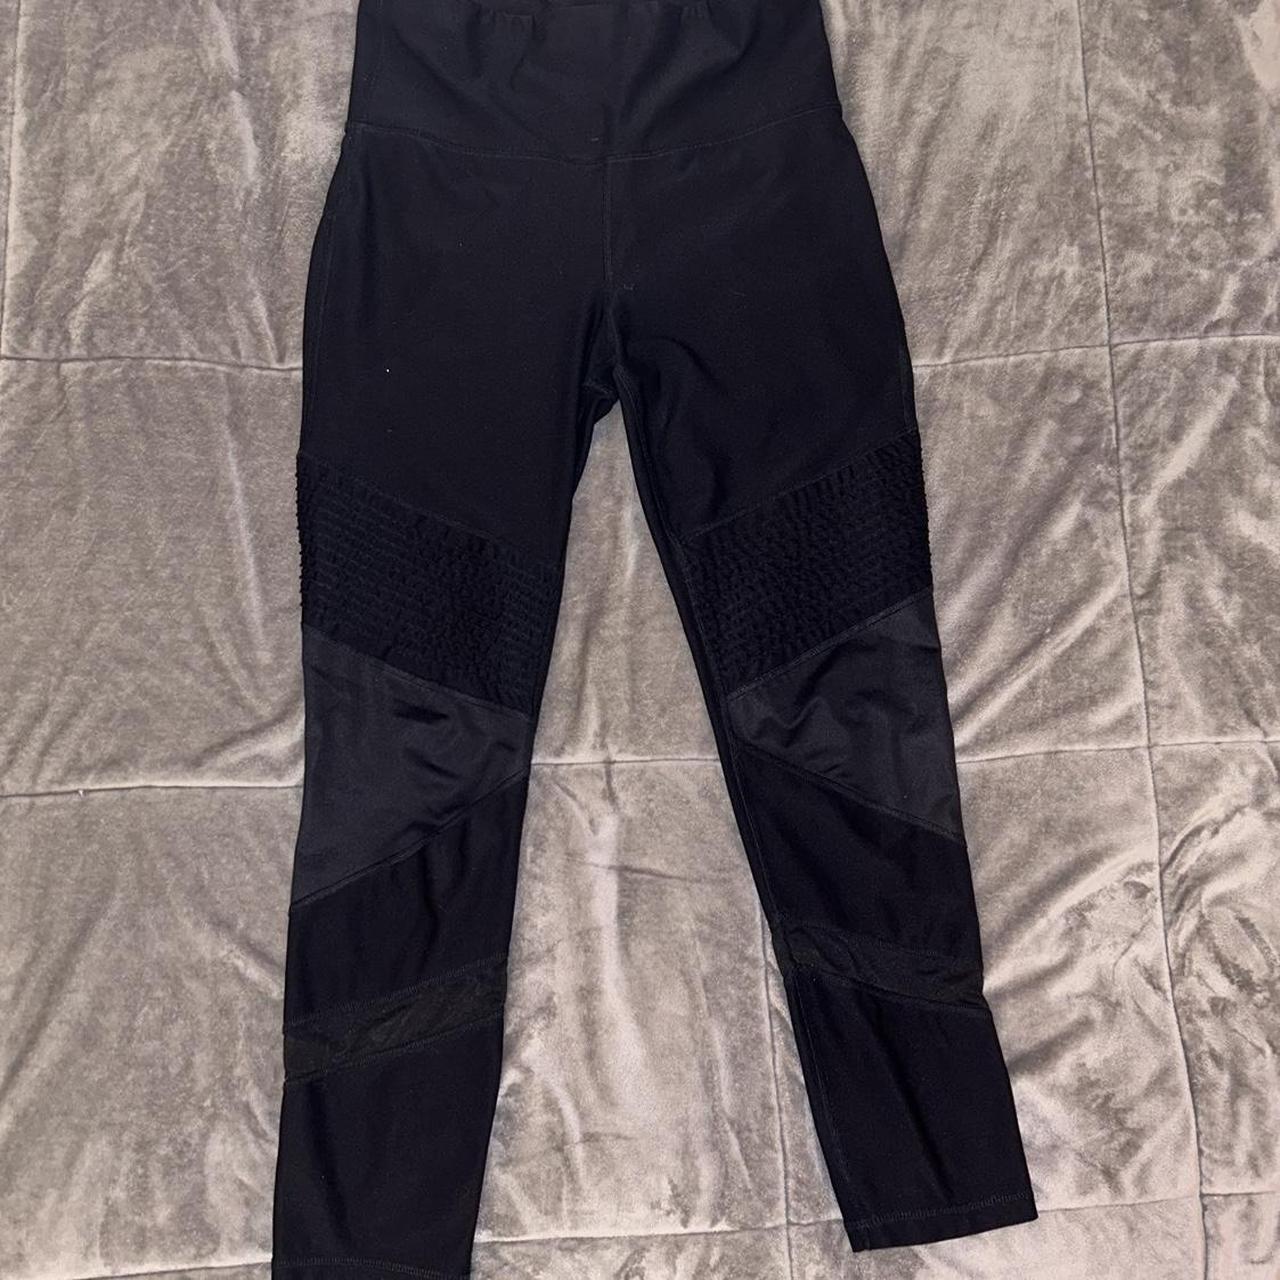 medium black xersion leggings -fits like a - Depop